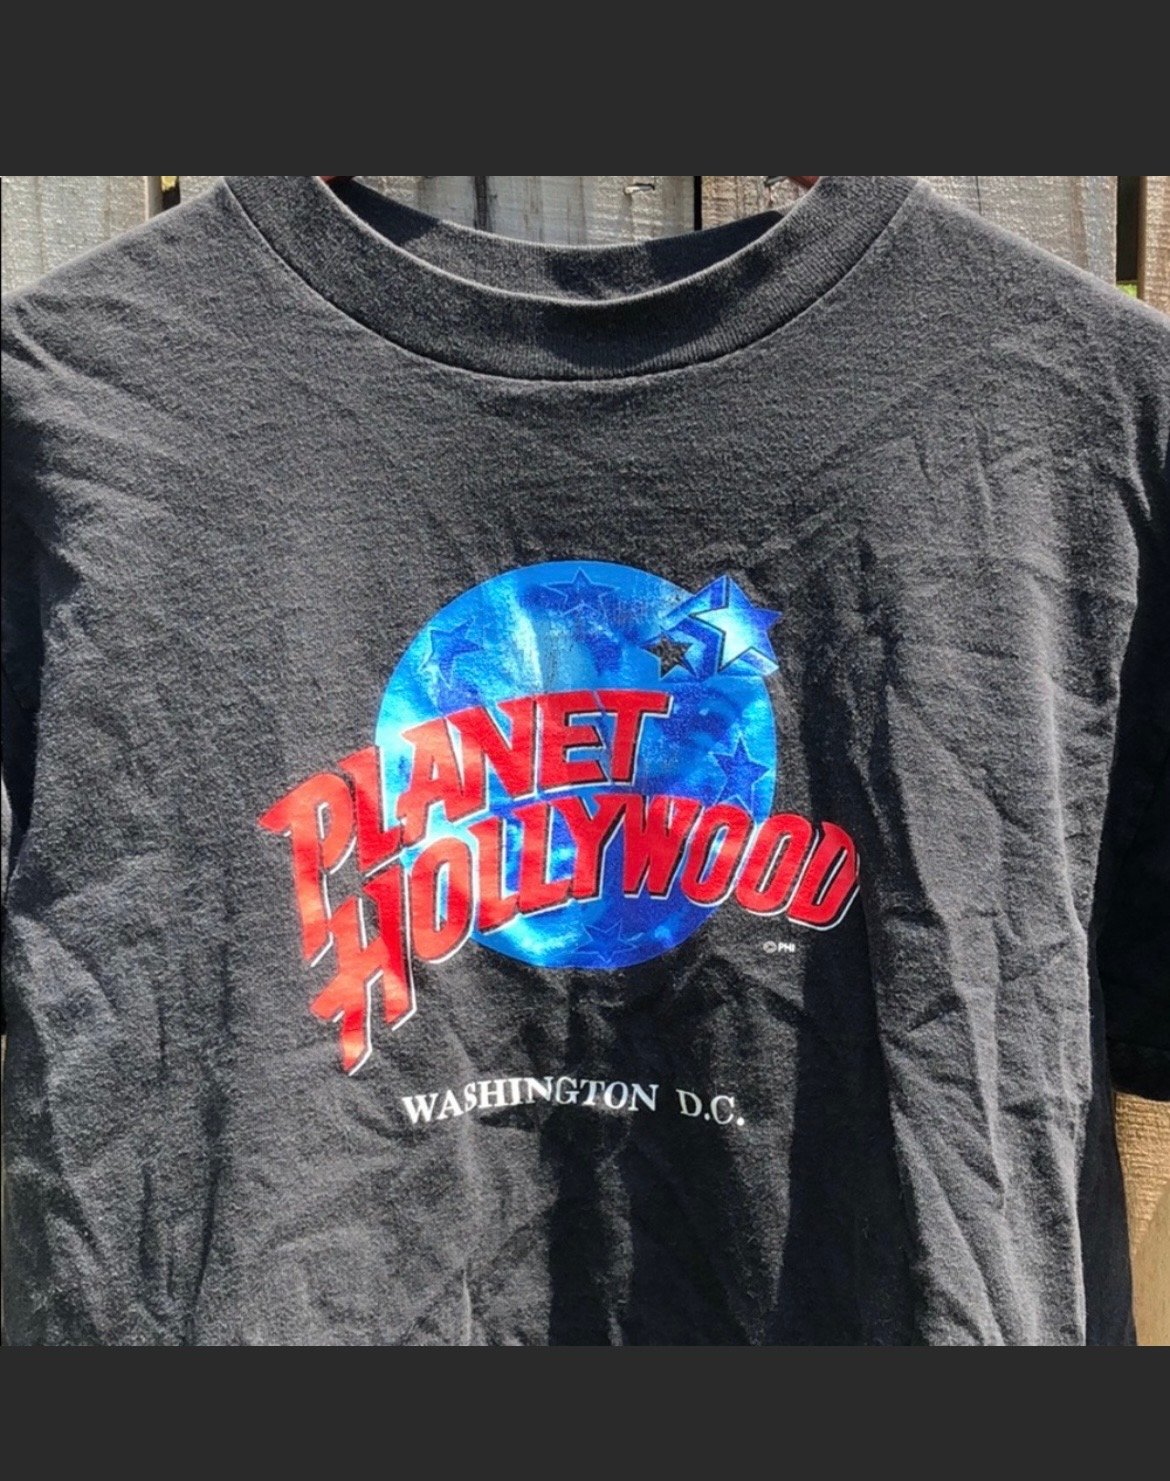 Planet Hollywood T-shirt | SSSB